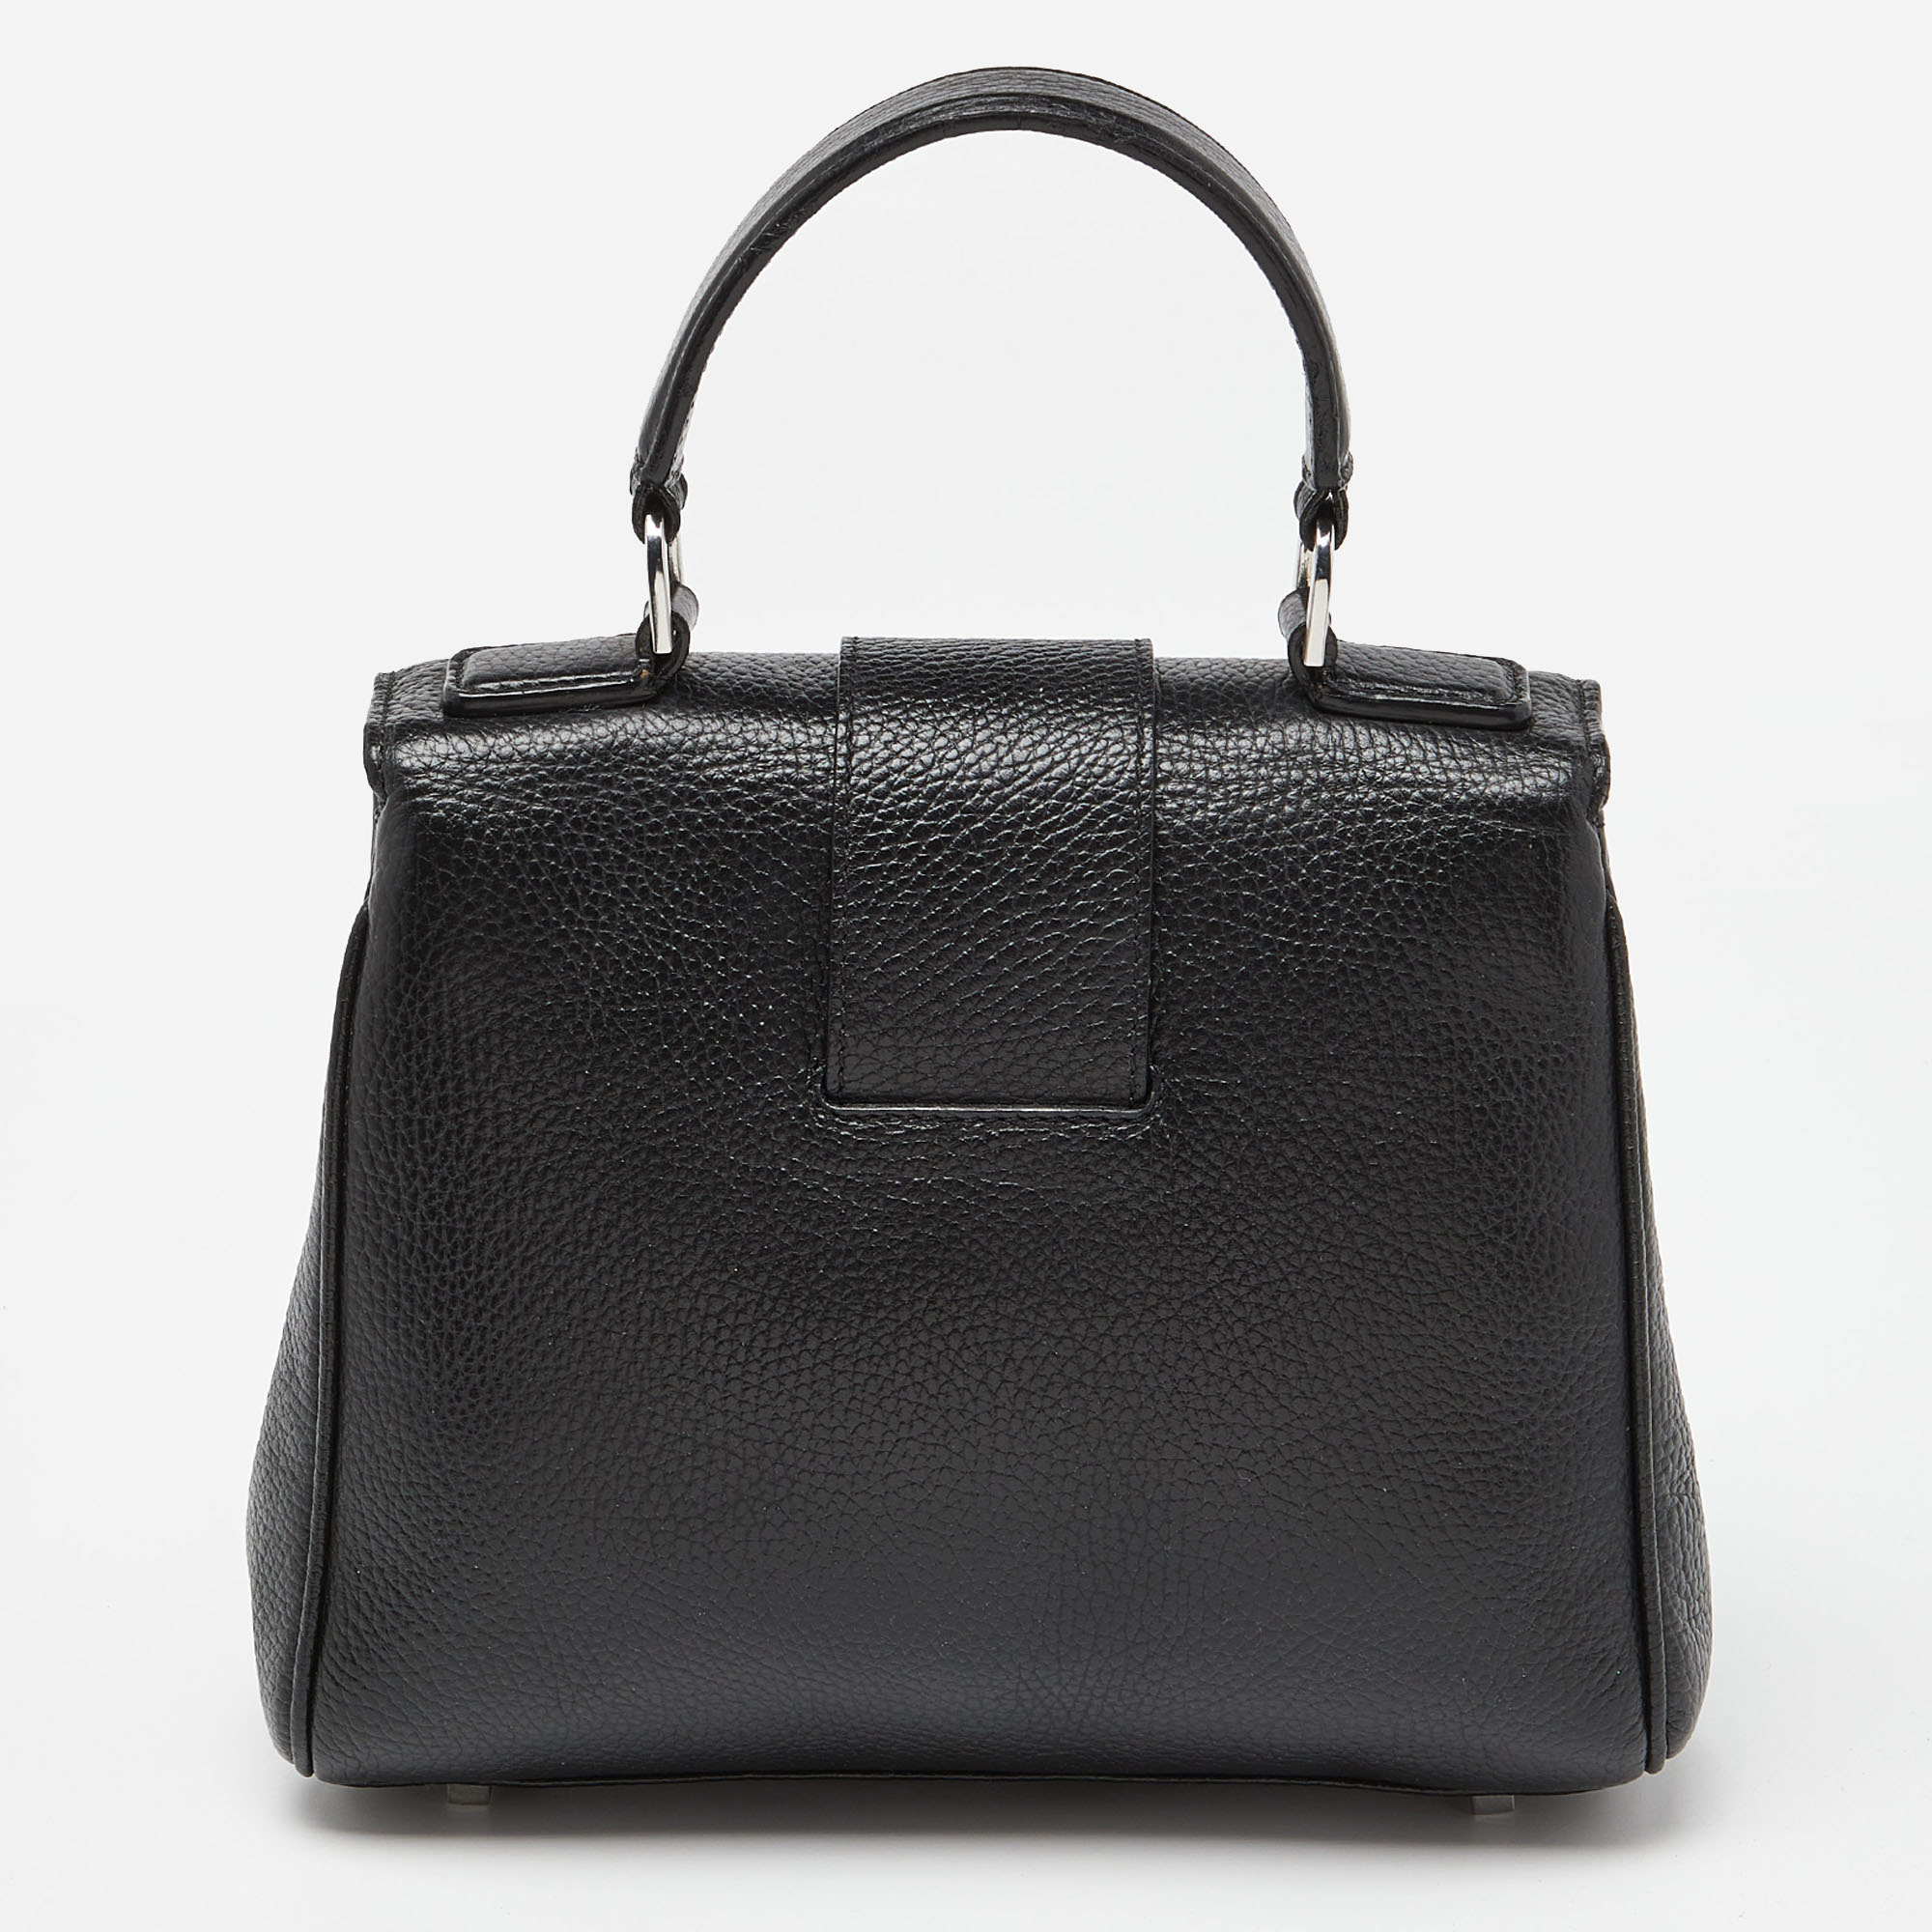 Aigner Black Leather Top Handle Bag